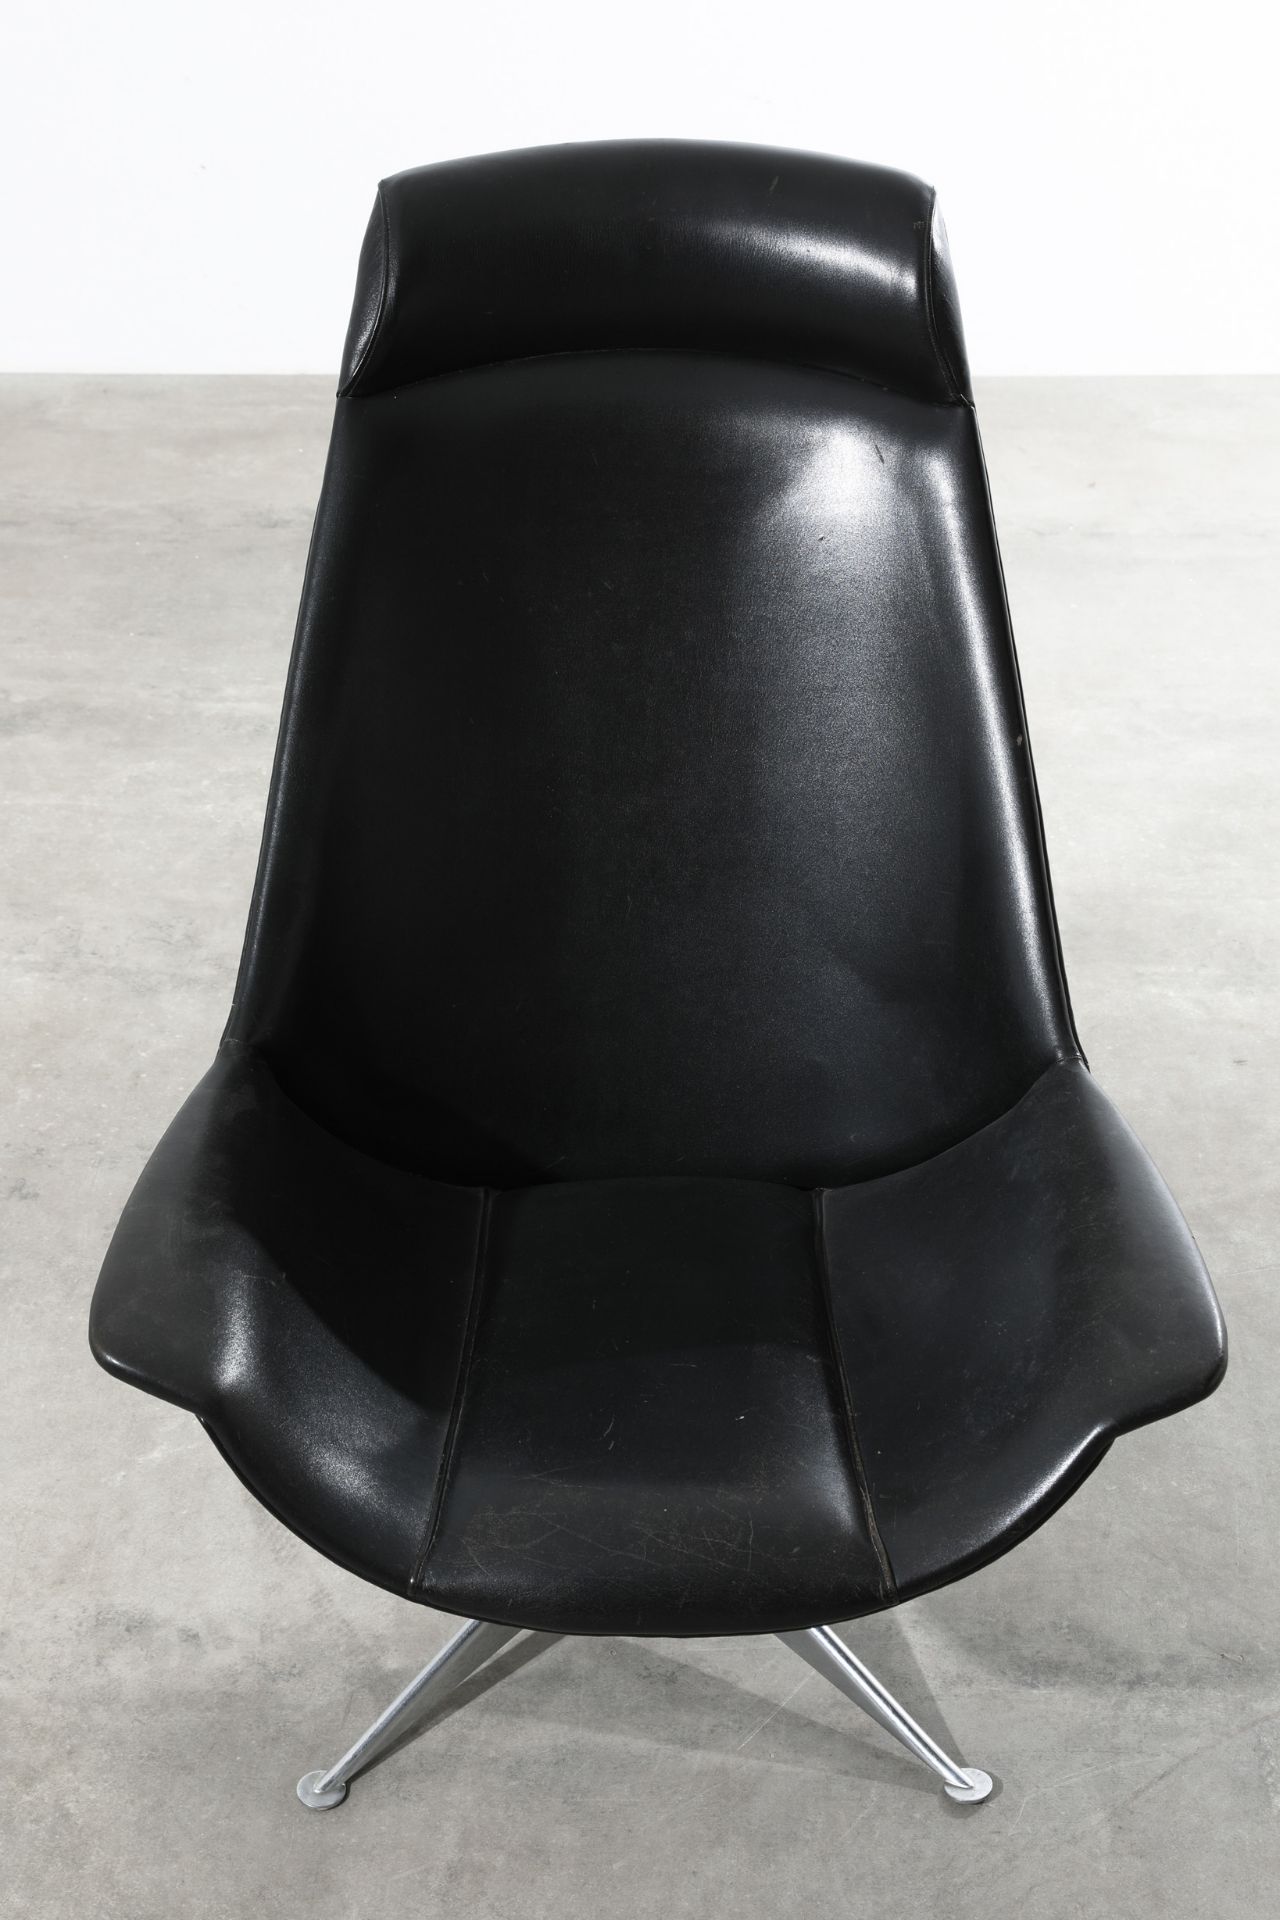 Poul M. Jensen, 1960s swivel Lounge Chair - Image 2 of 4